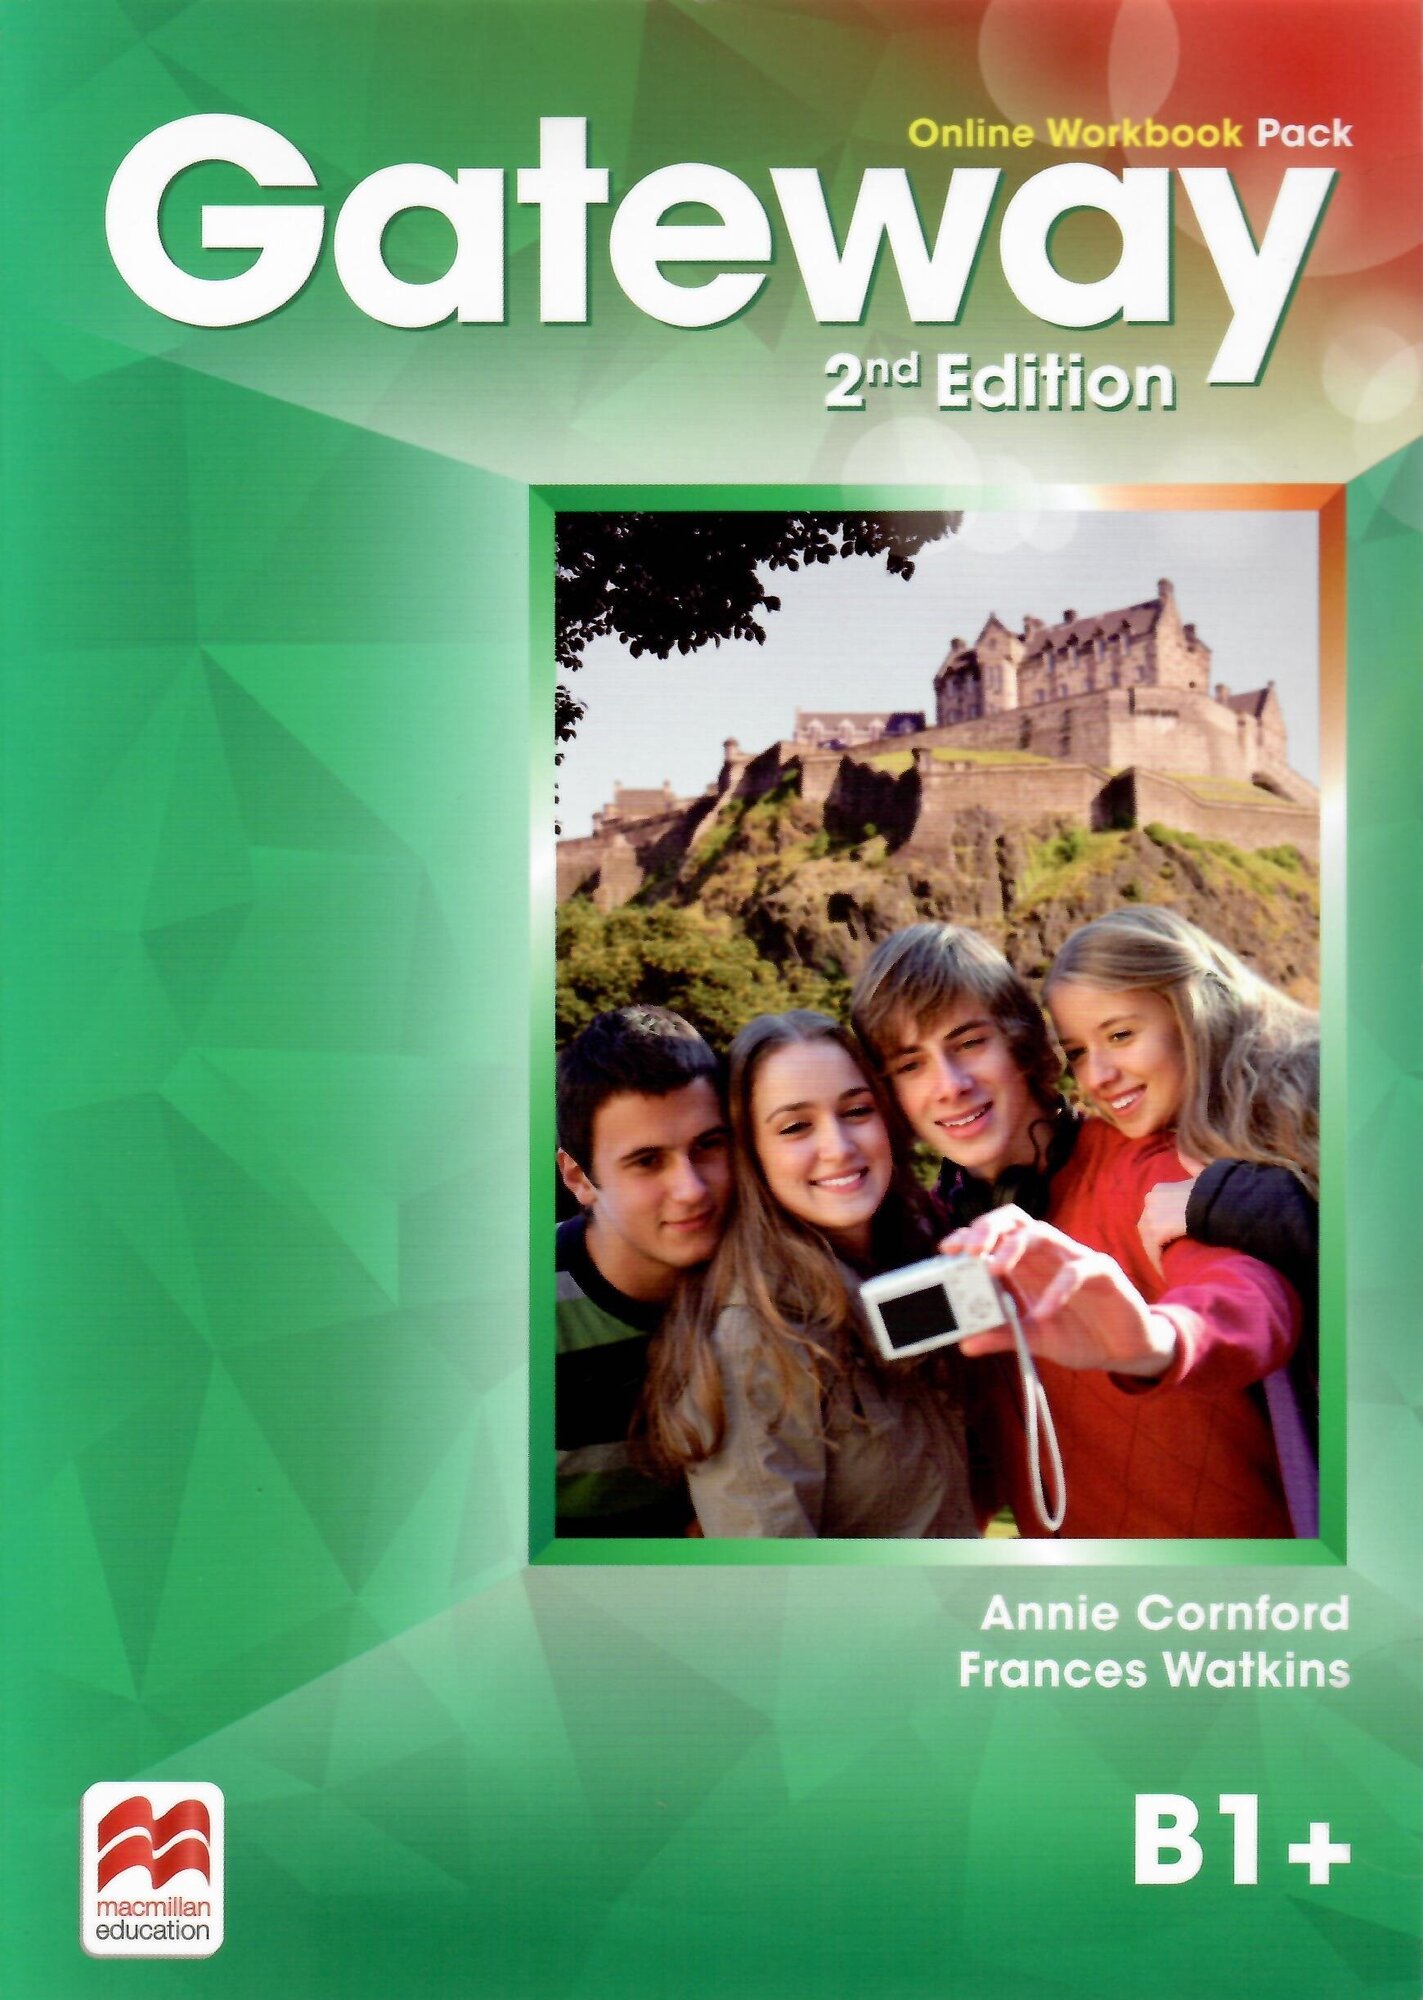 Gateway Second Edition B1+ Online Workbook on Printed Card